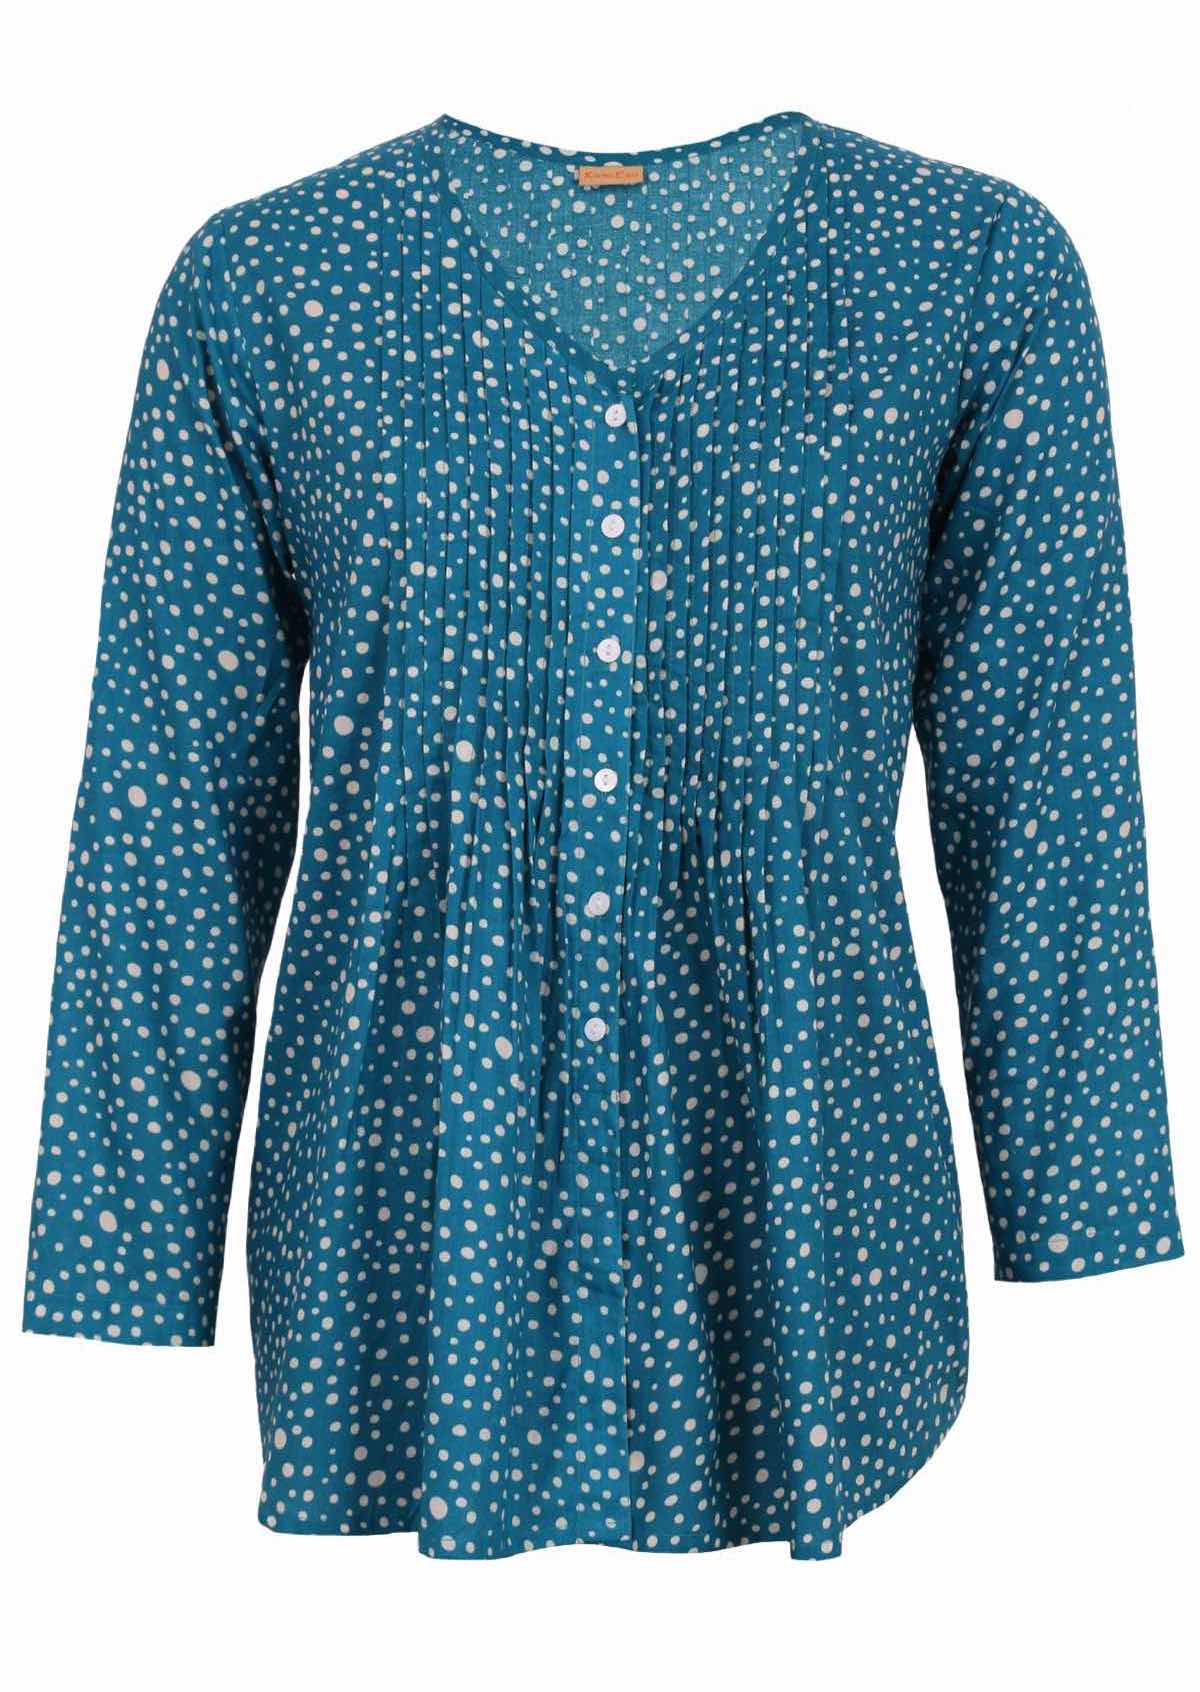 100% printed cotton women's blouse designed in Australia